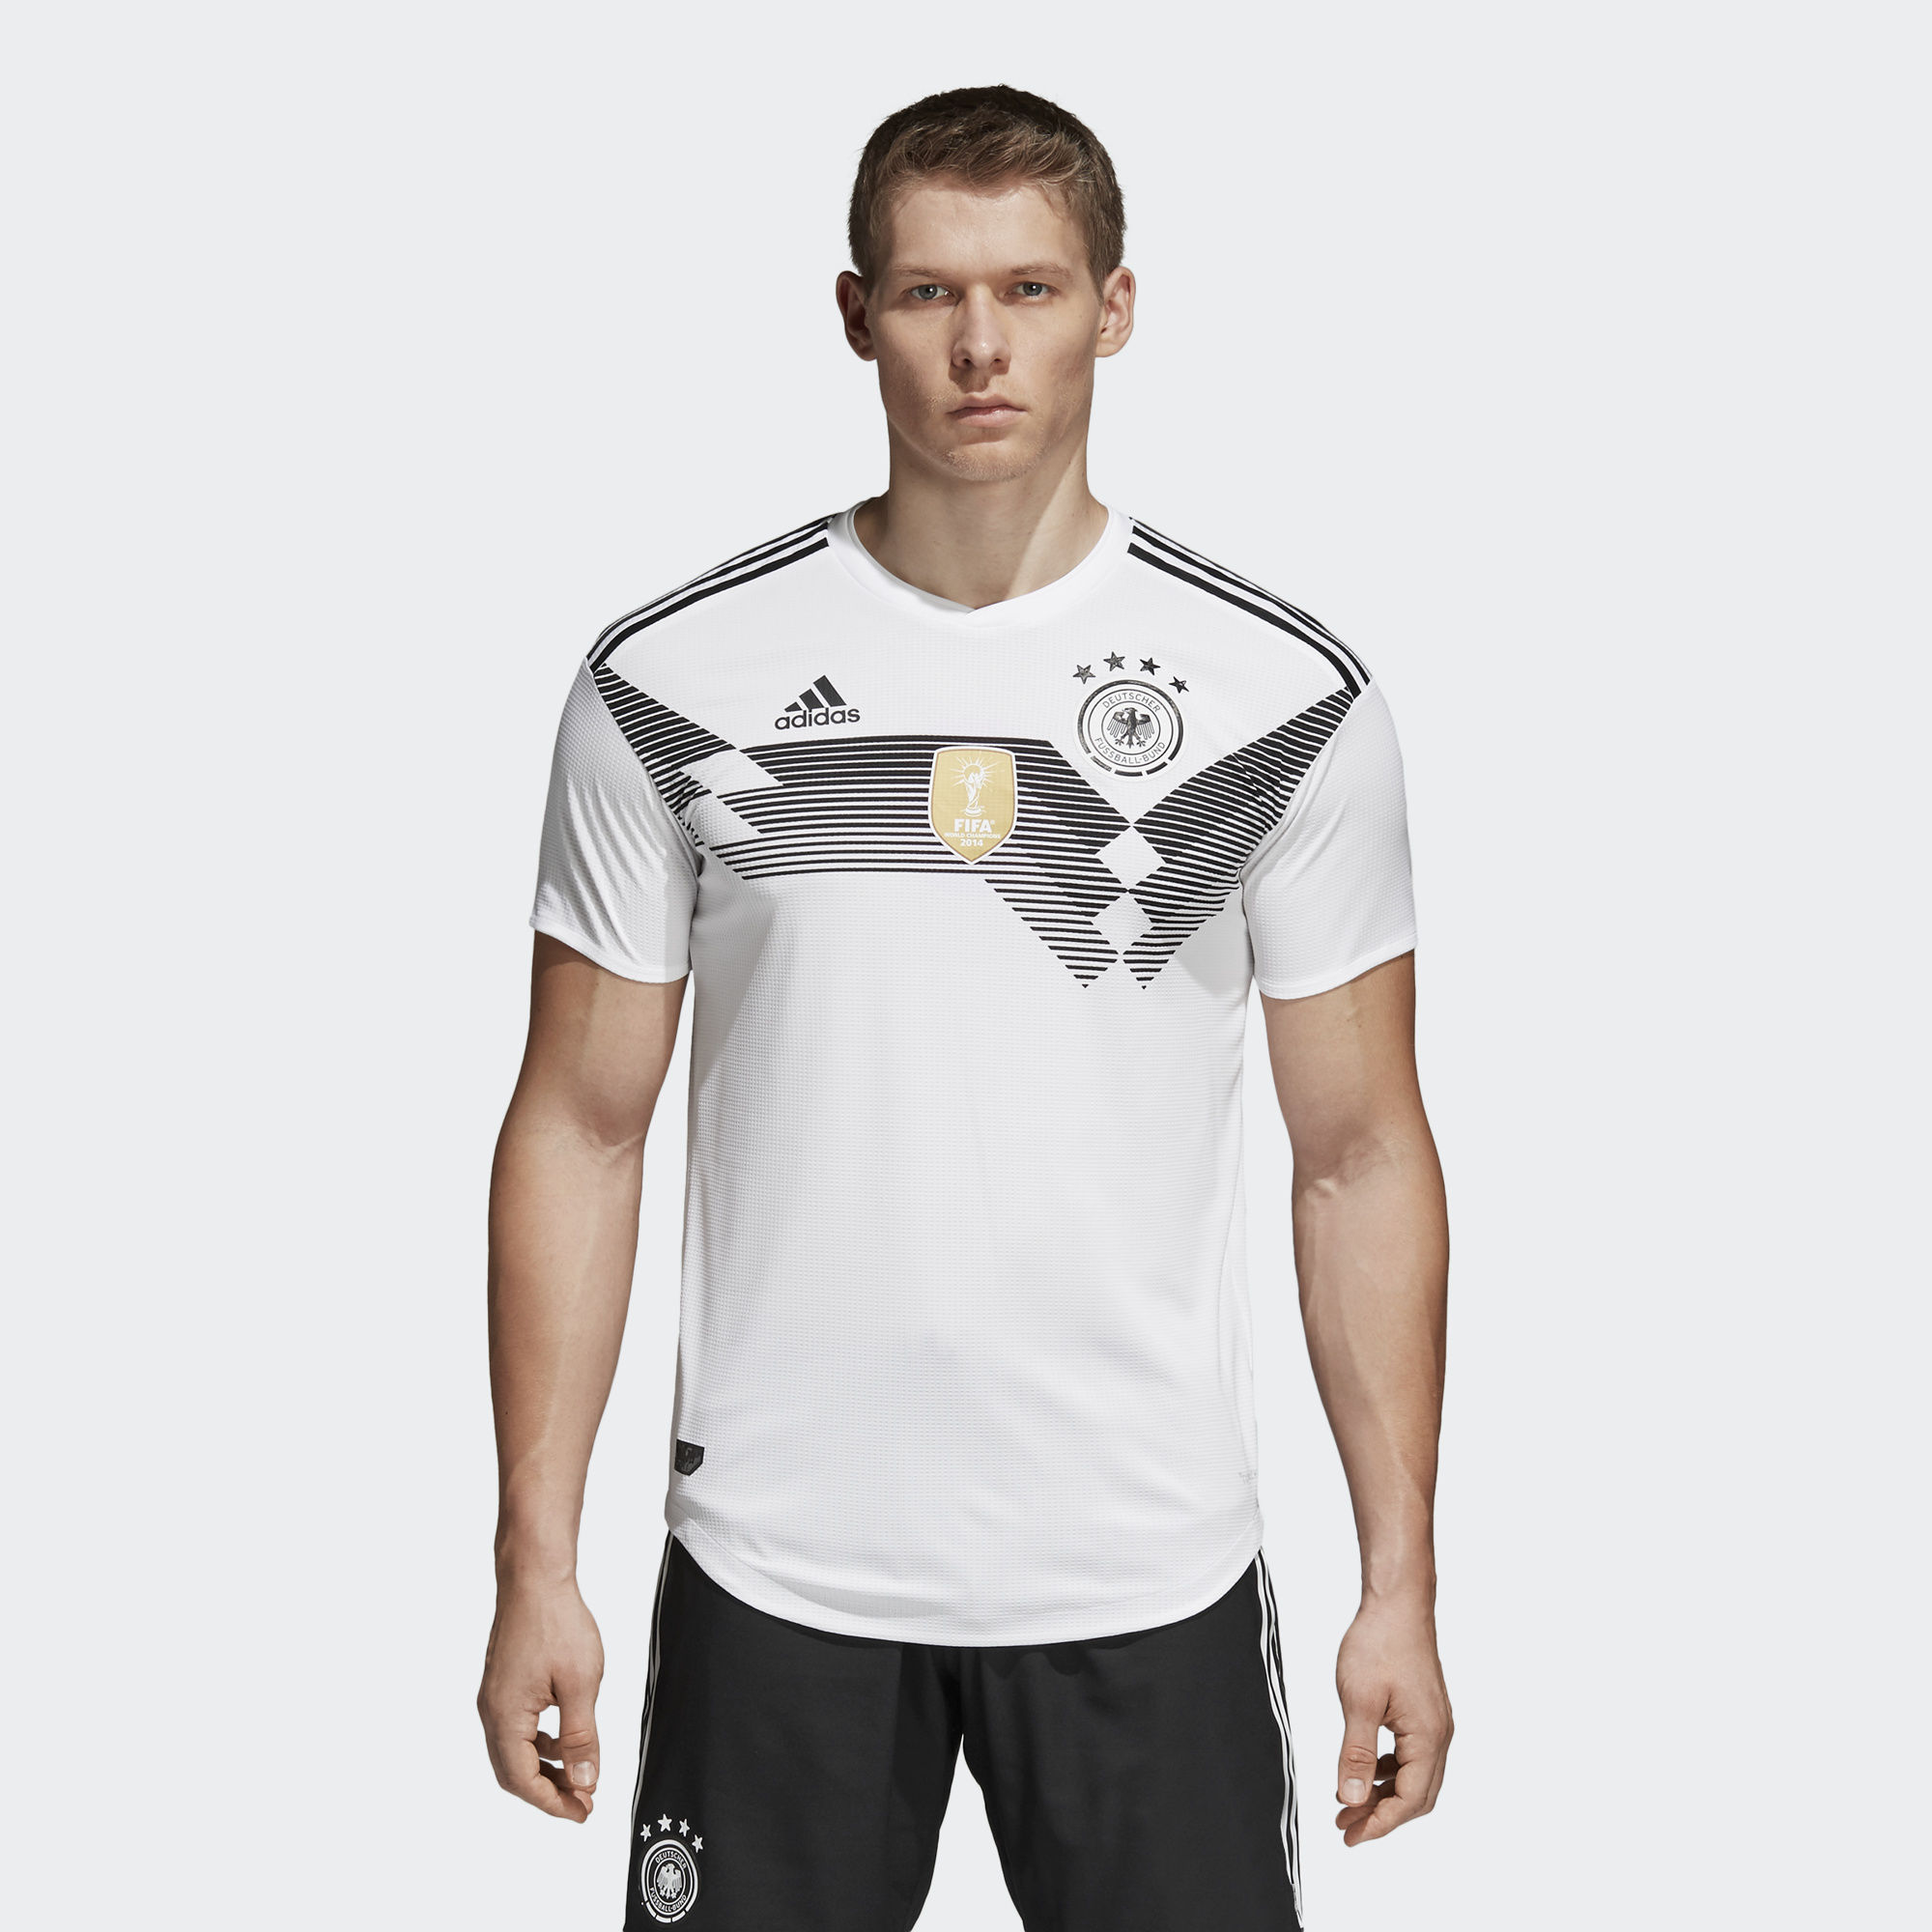 Germany 2018 World Cup Adidas Home Kit | 17/18 Kits | Football shirt blog